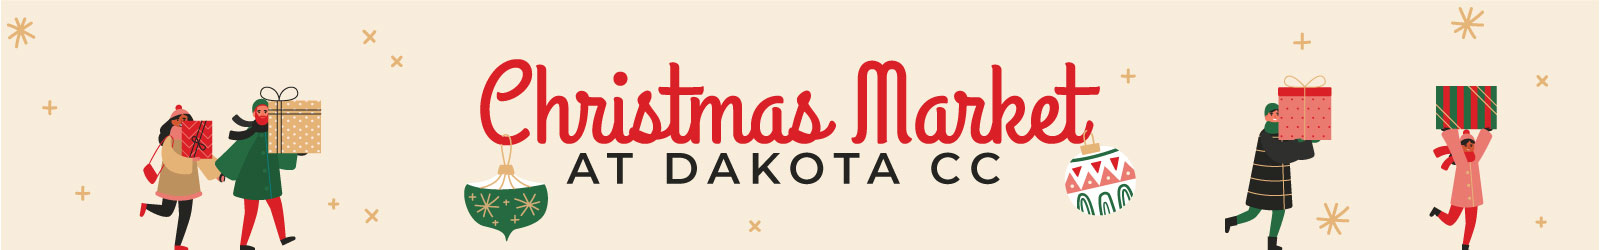 Dakota CC Christmas Market